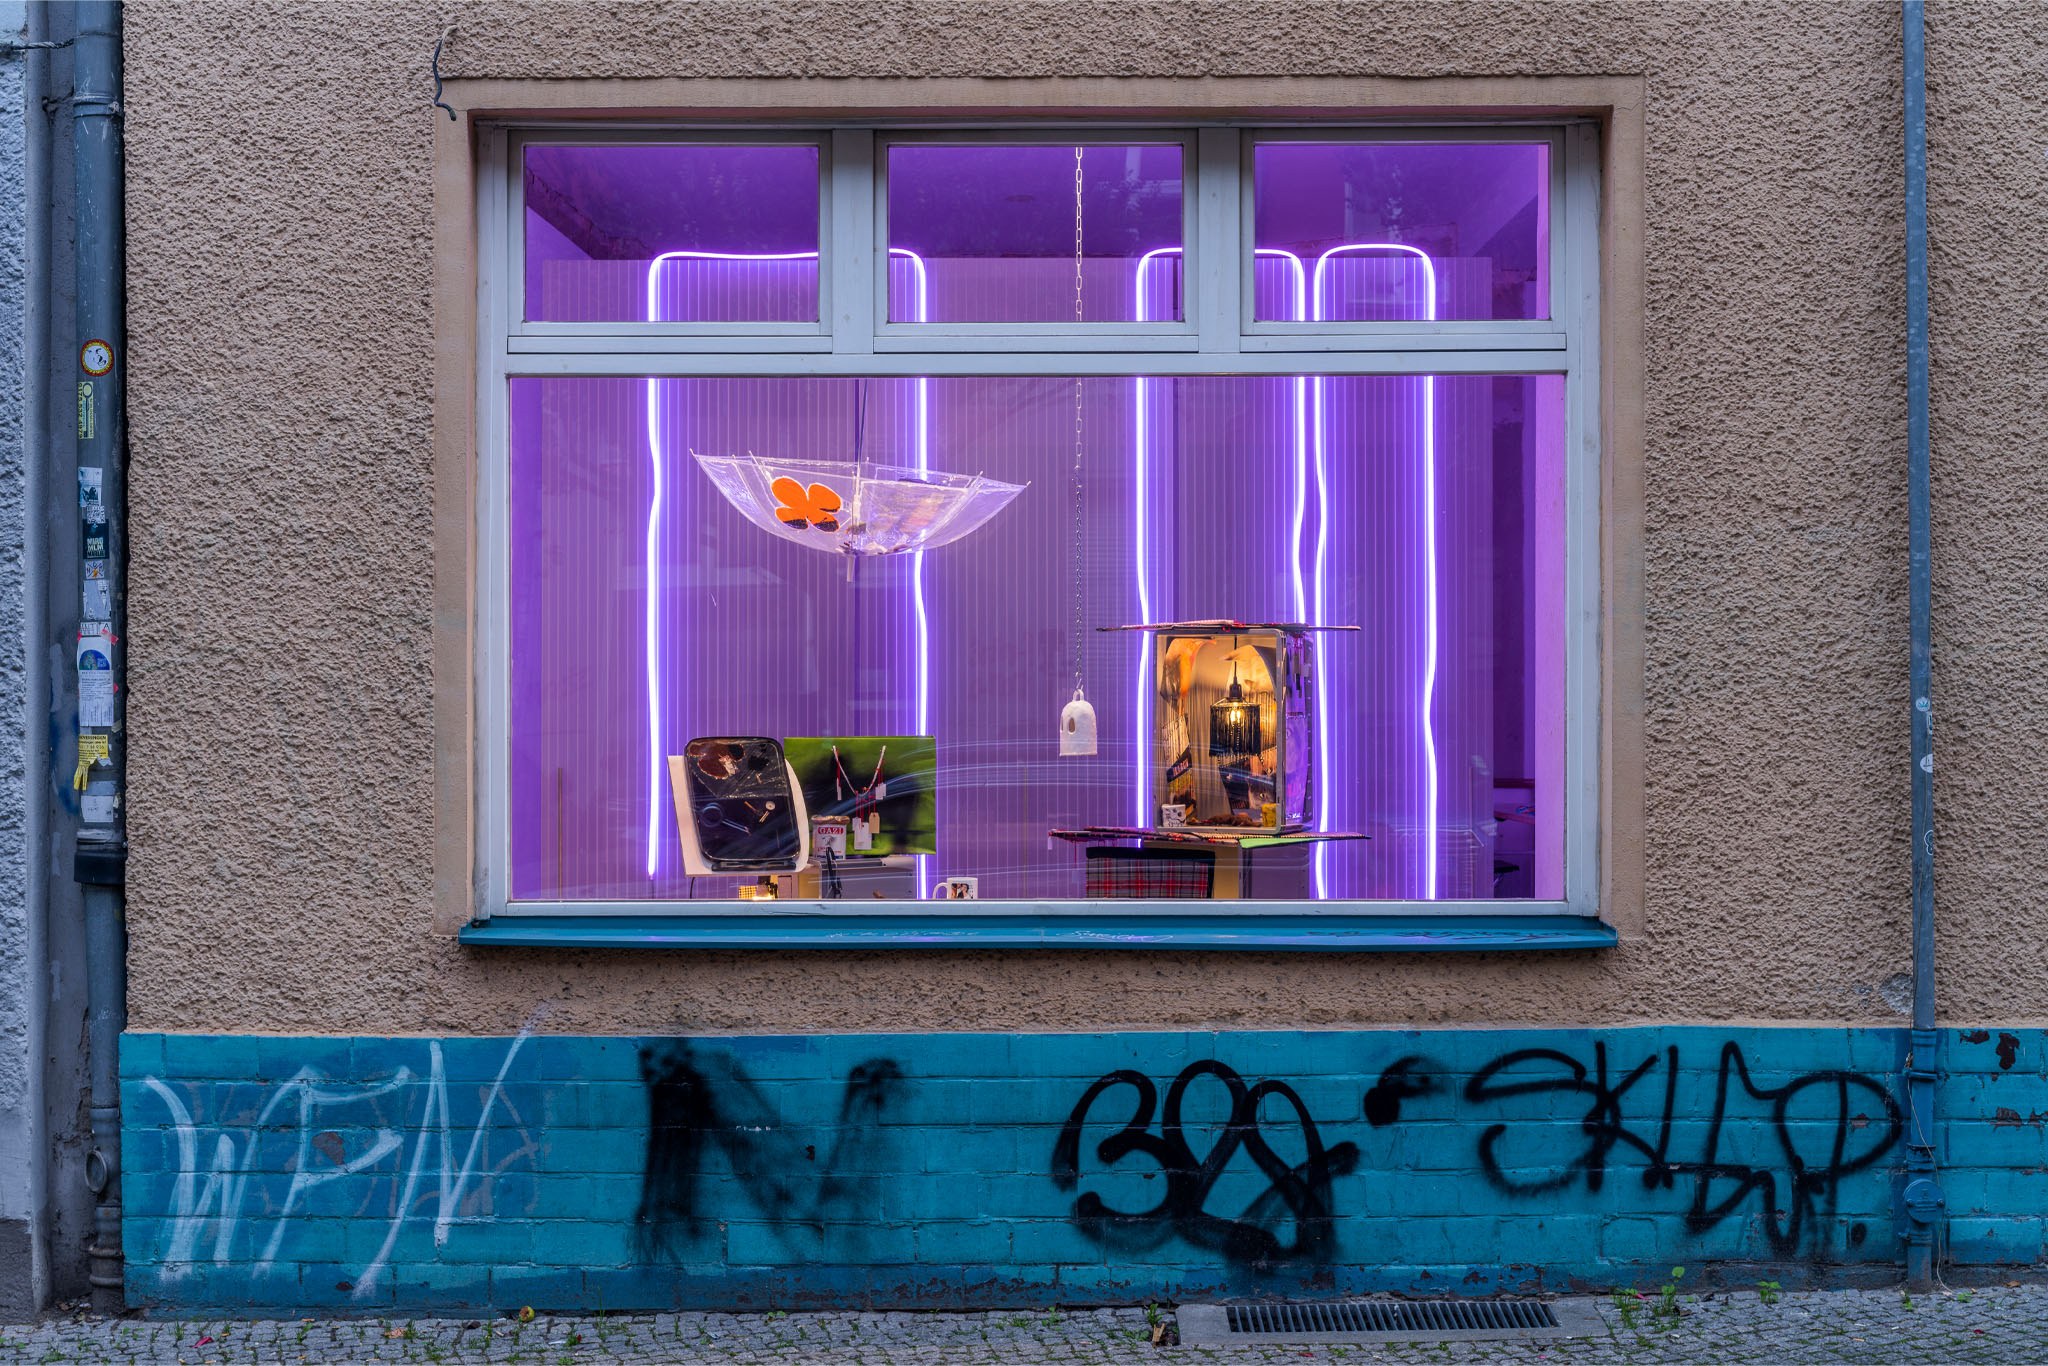 Black Palm â€“ Sonja Cvitkovic, Daily Deals, New Toni, Berlin, 2022, Installation view